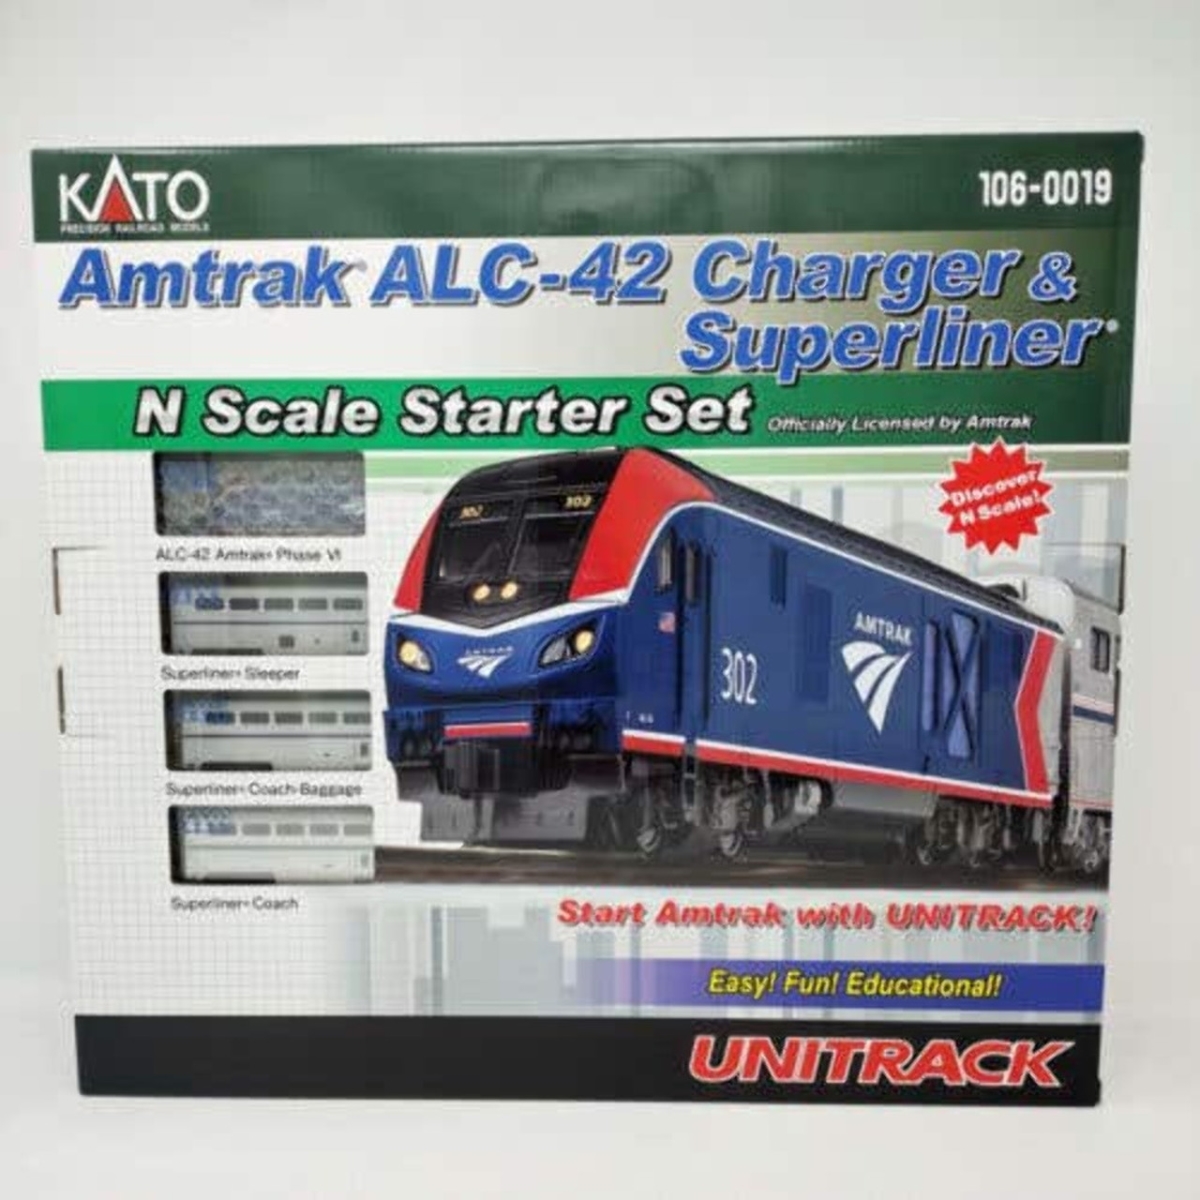 Picture of Kato KAT1060019 N Scale Amtrak ALC-42 Charger Superliner Starter Set